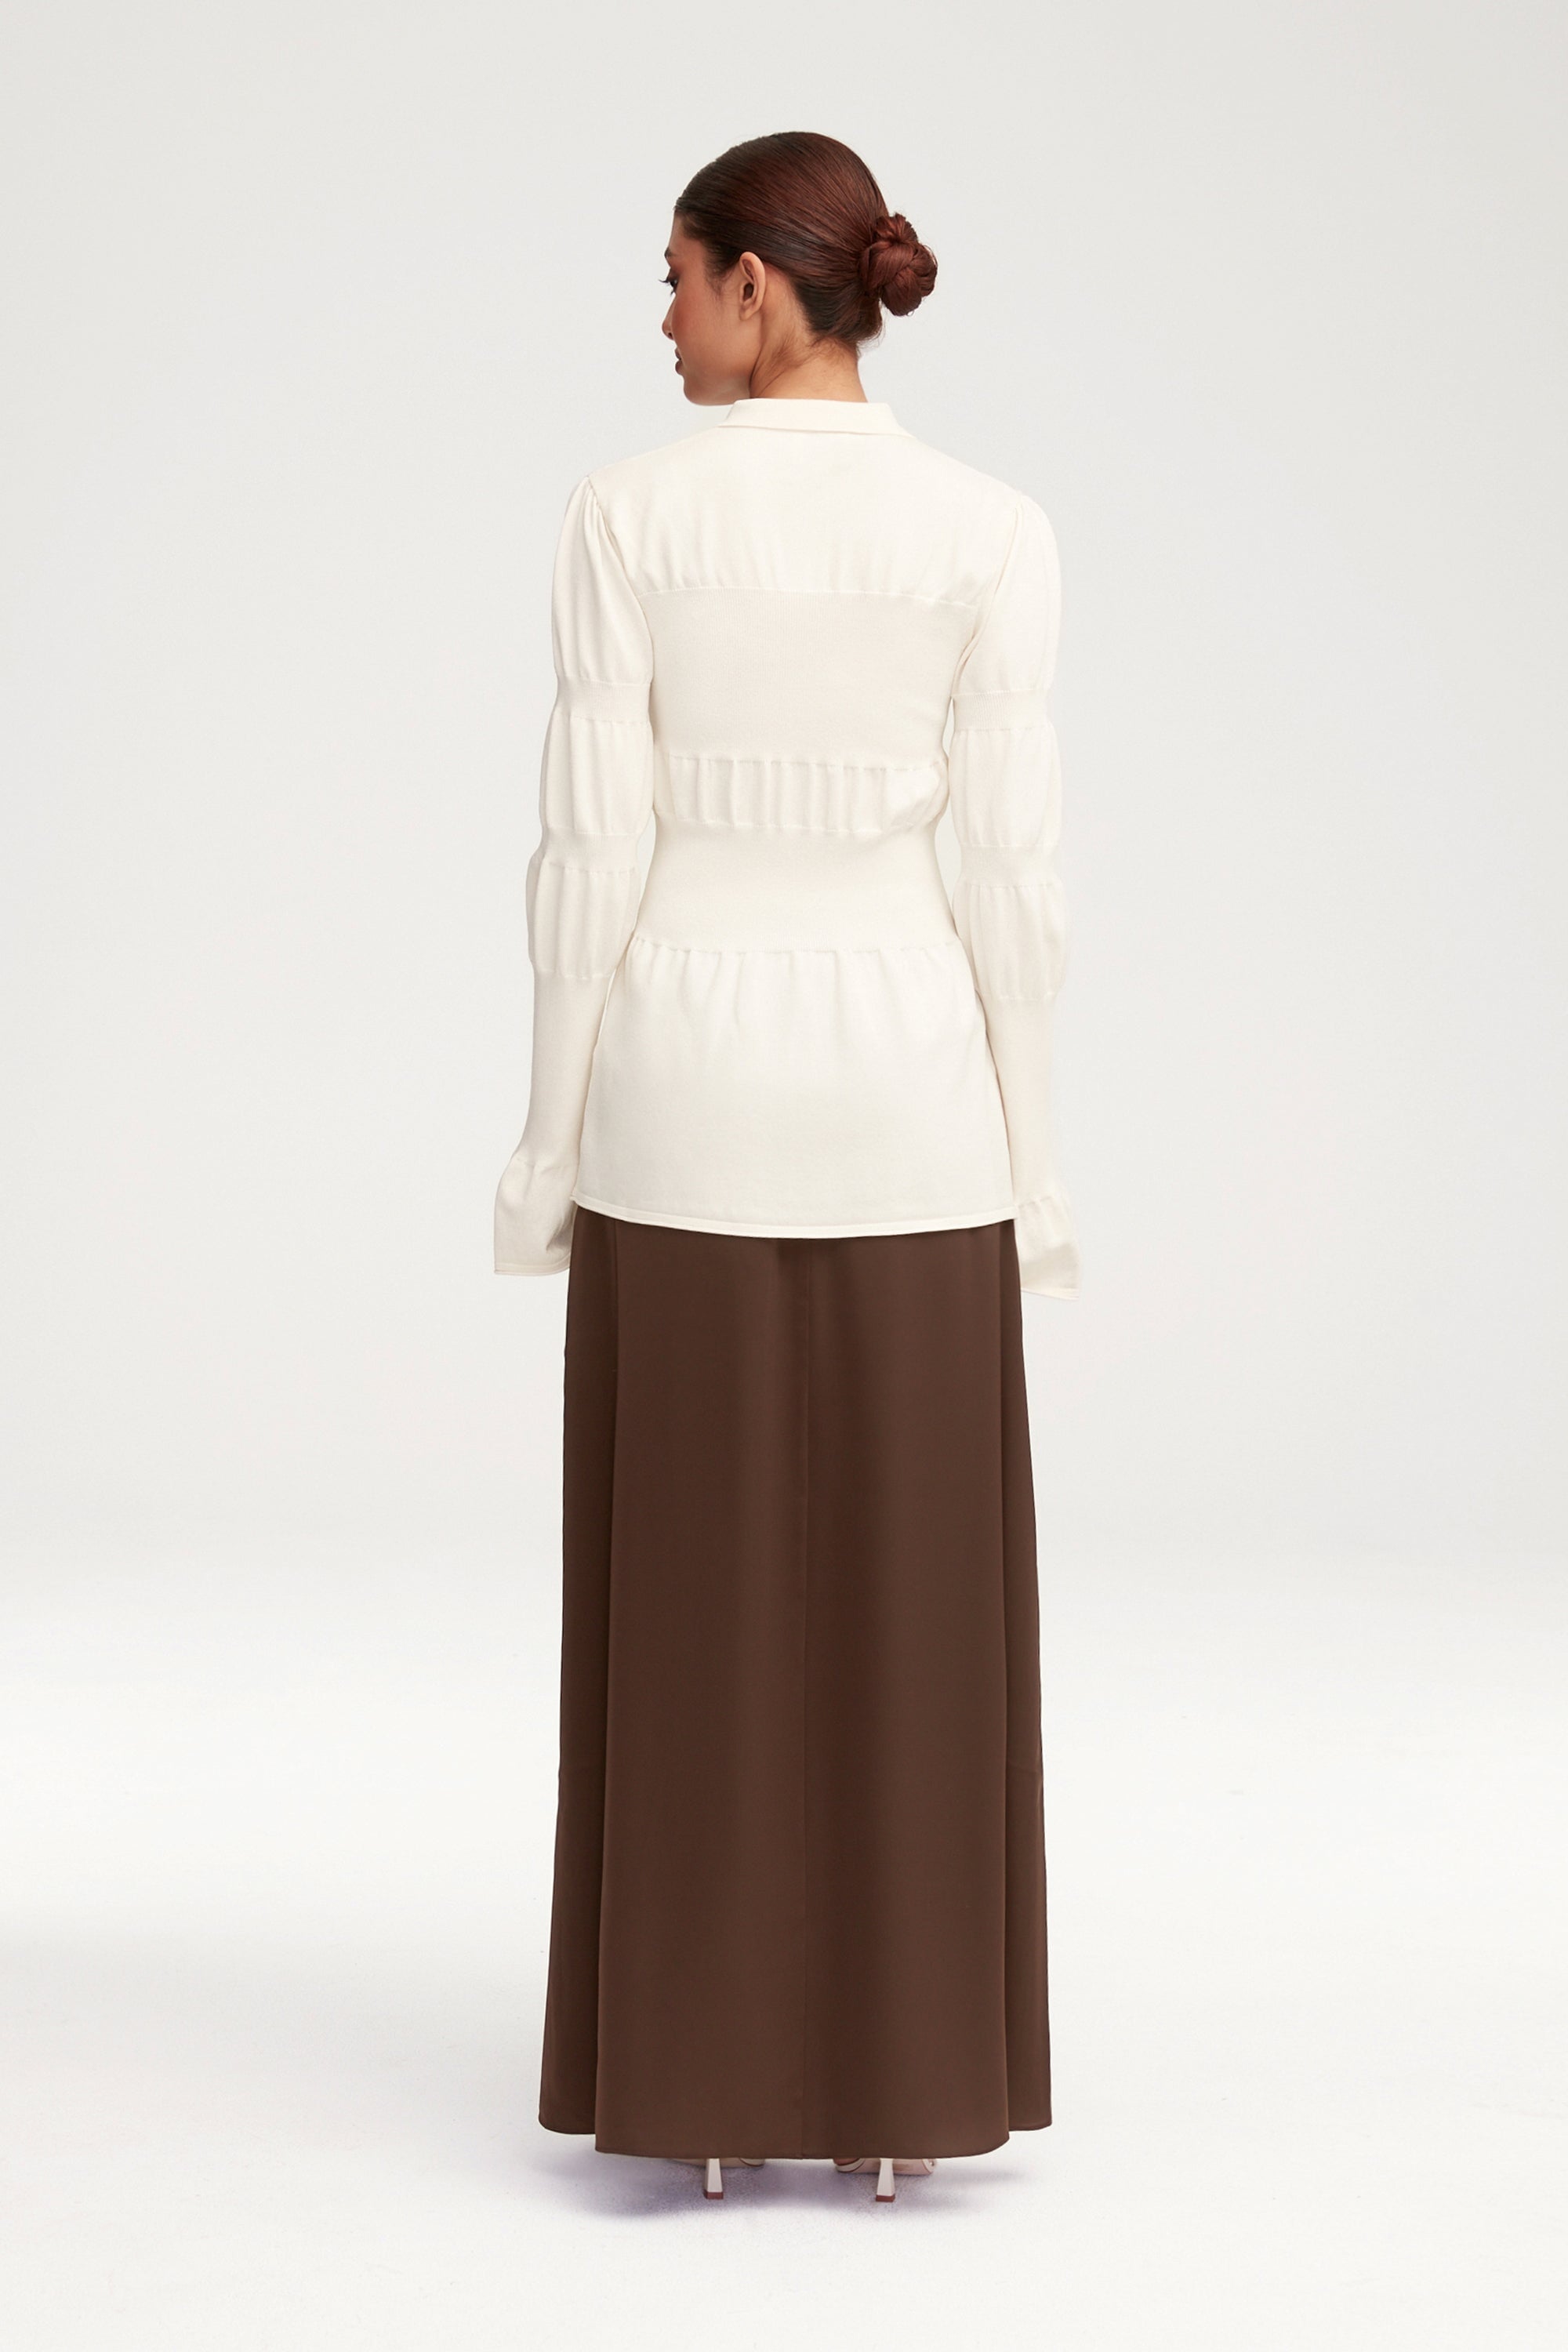 Essential Satin Maxi Skirt - Brown Clothing Veiled 